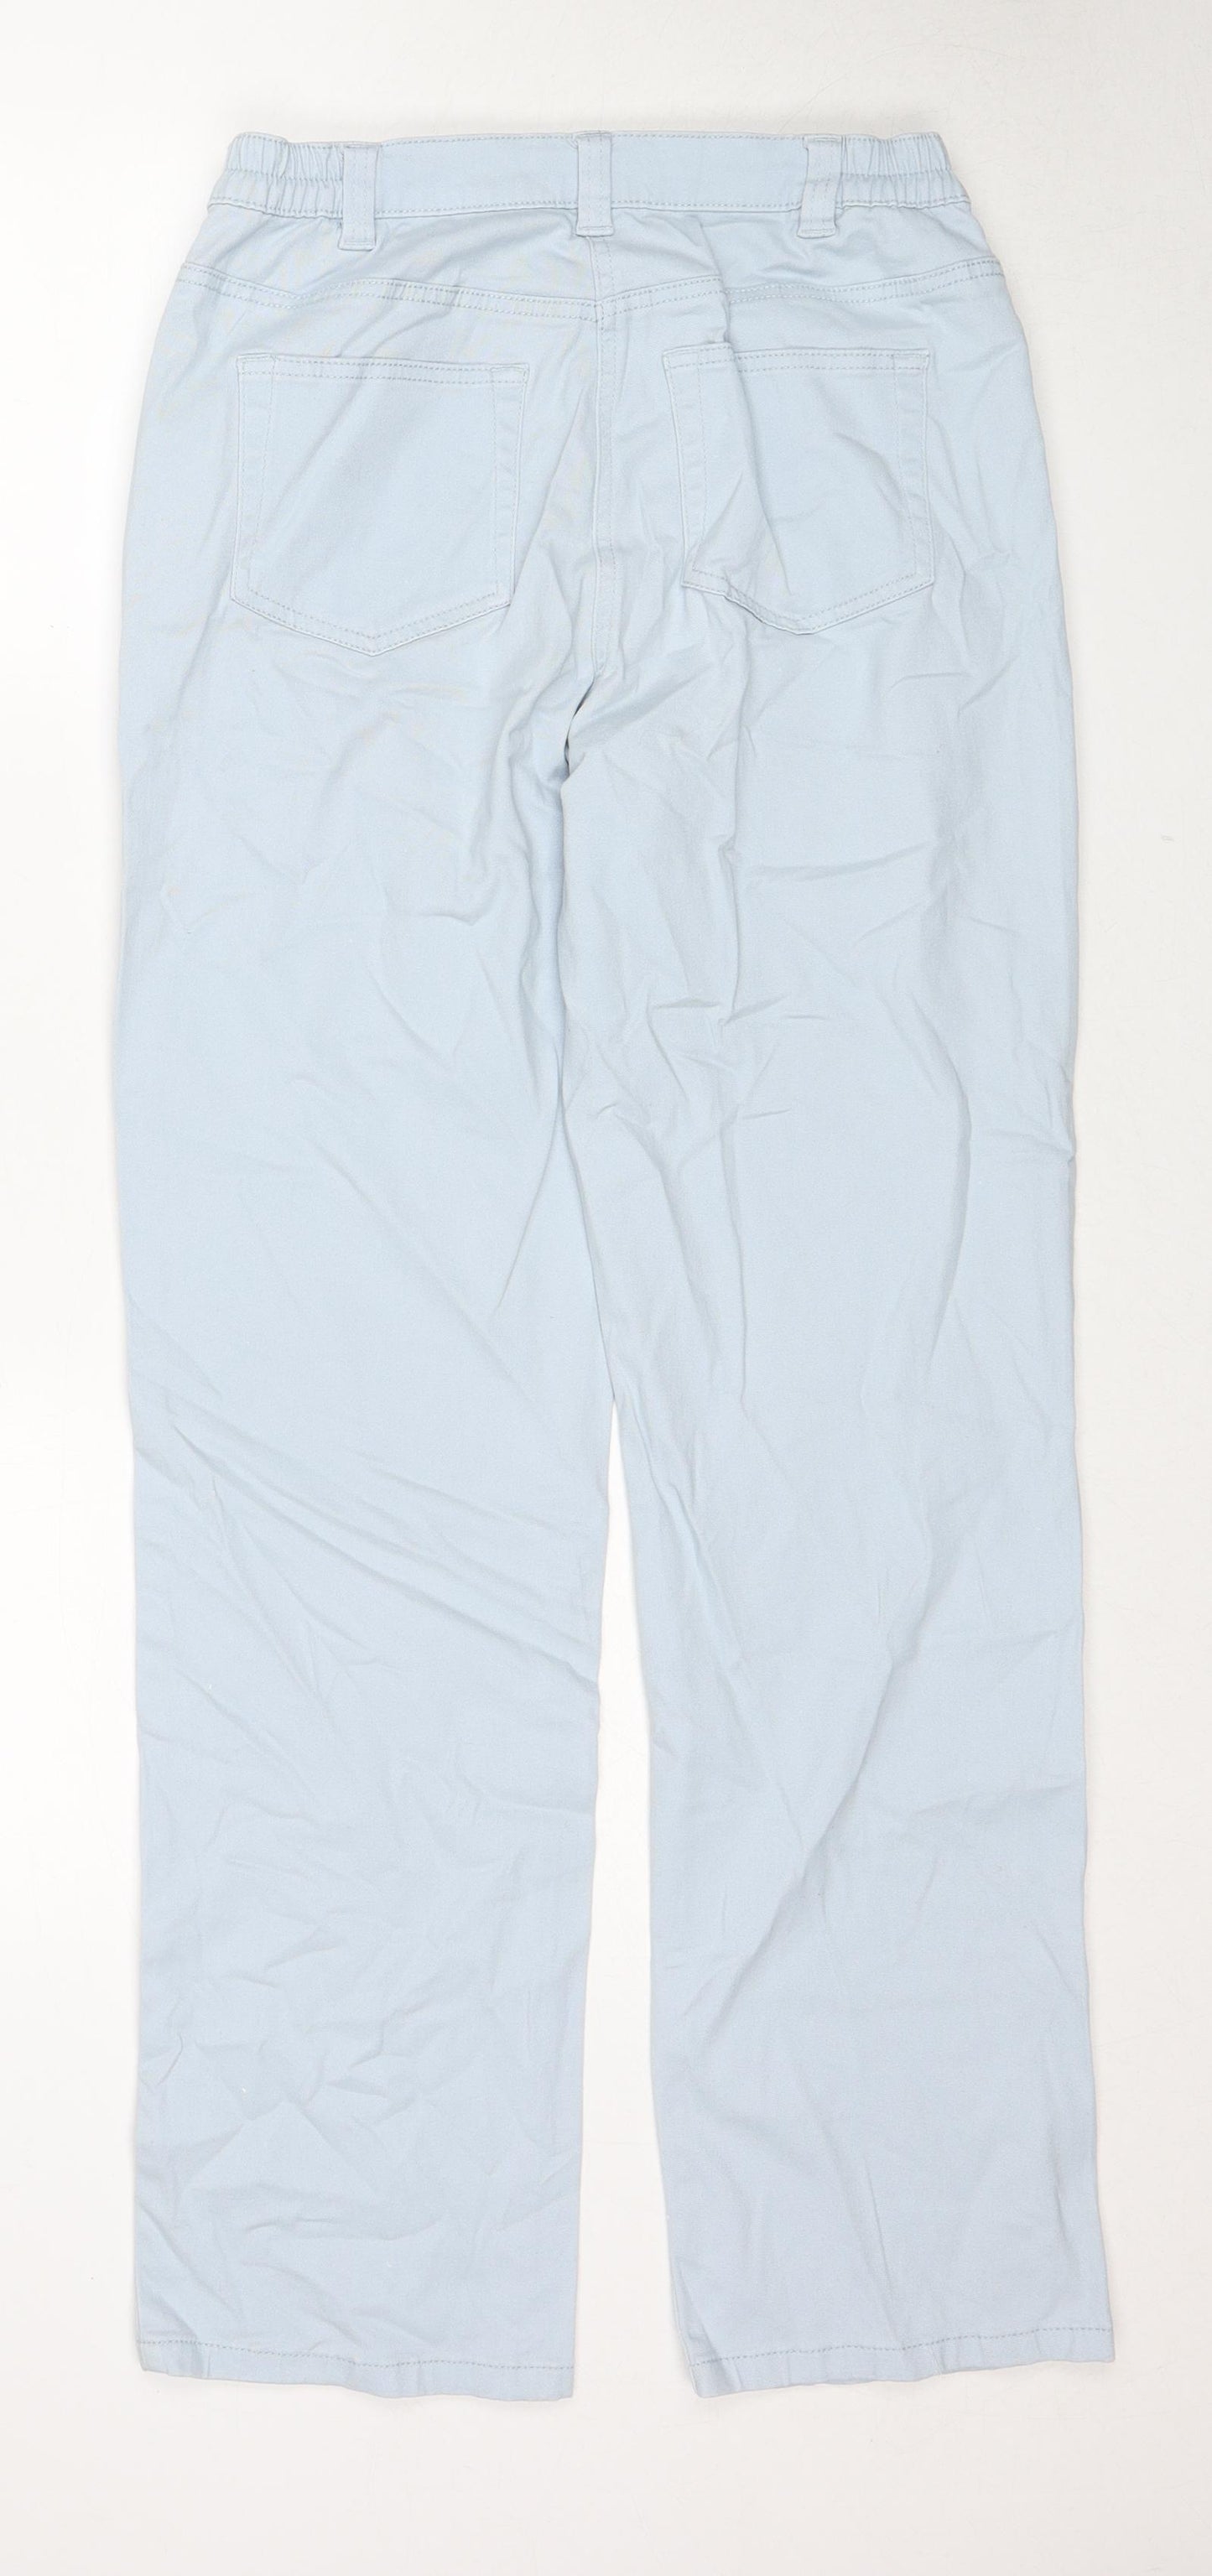 Damart Womens Blue Cotton Straight Jeans Size 12 Regular Zip